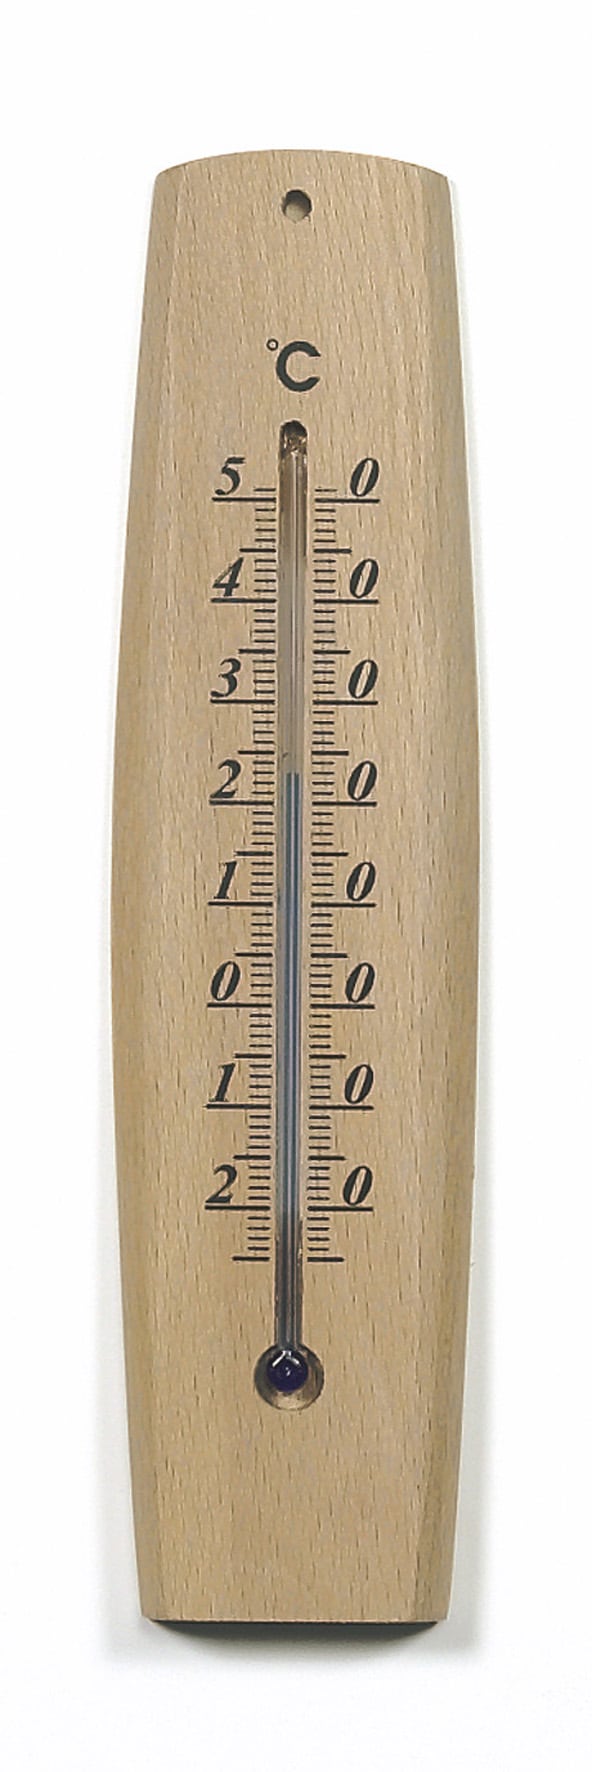 thermomètre bois clair 22 cm - STIL - Mr.Bricolage